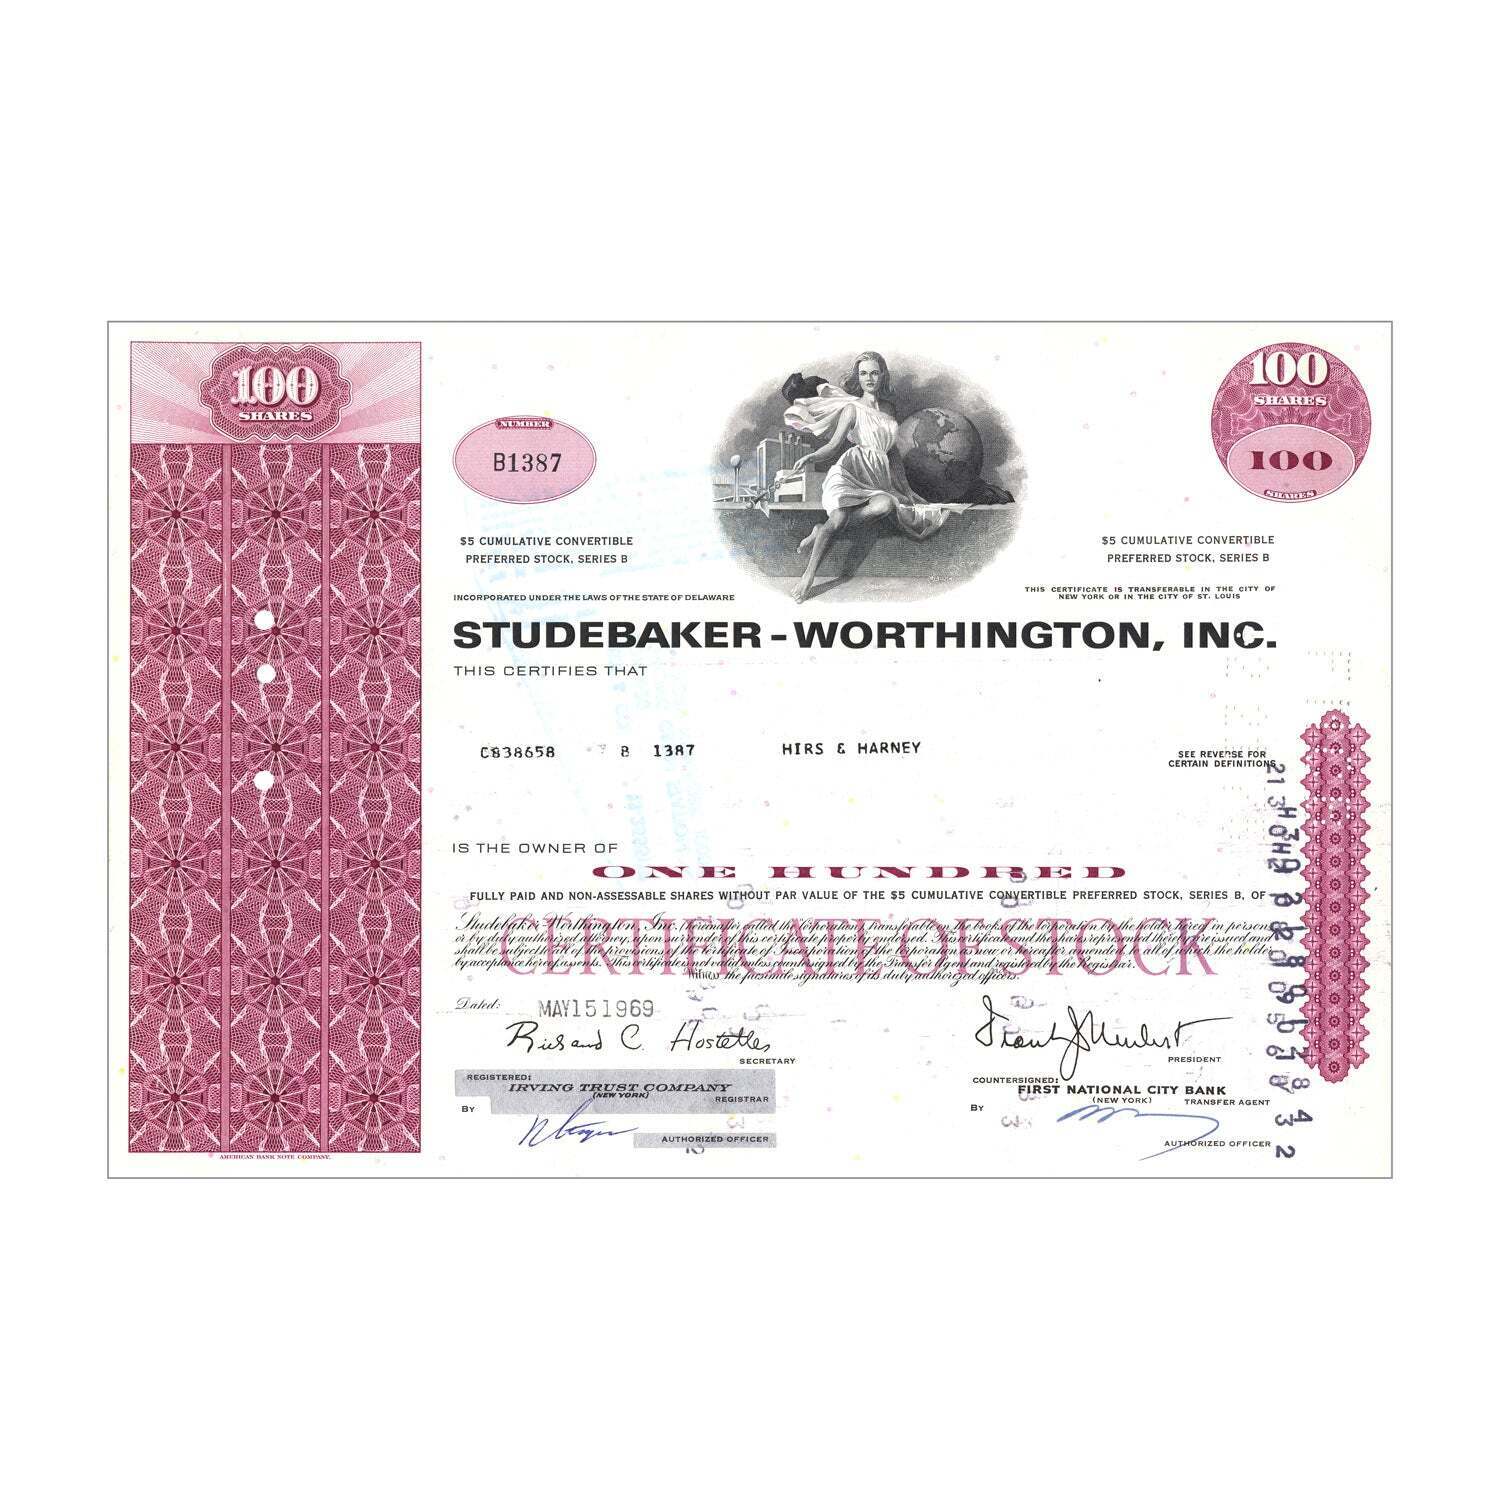 Studebaker-Worthington Stock Certificate // 100 Shares // Pink // 1960s-70s